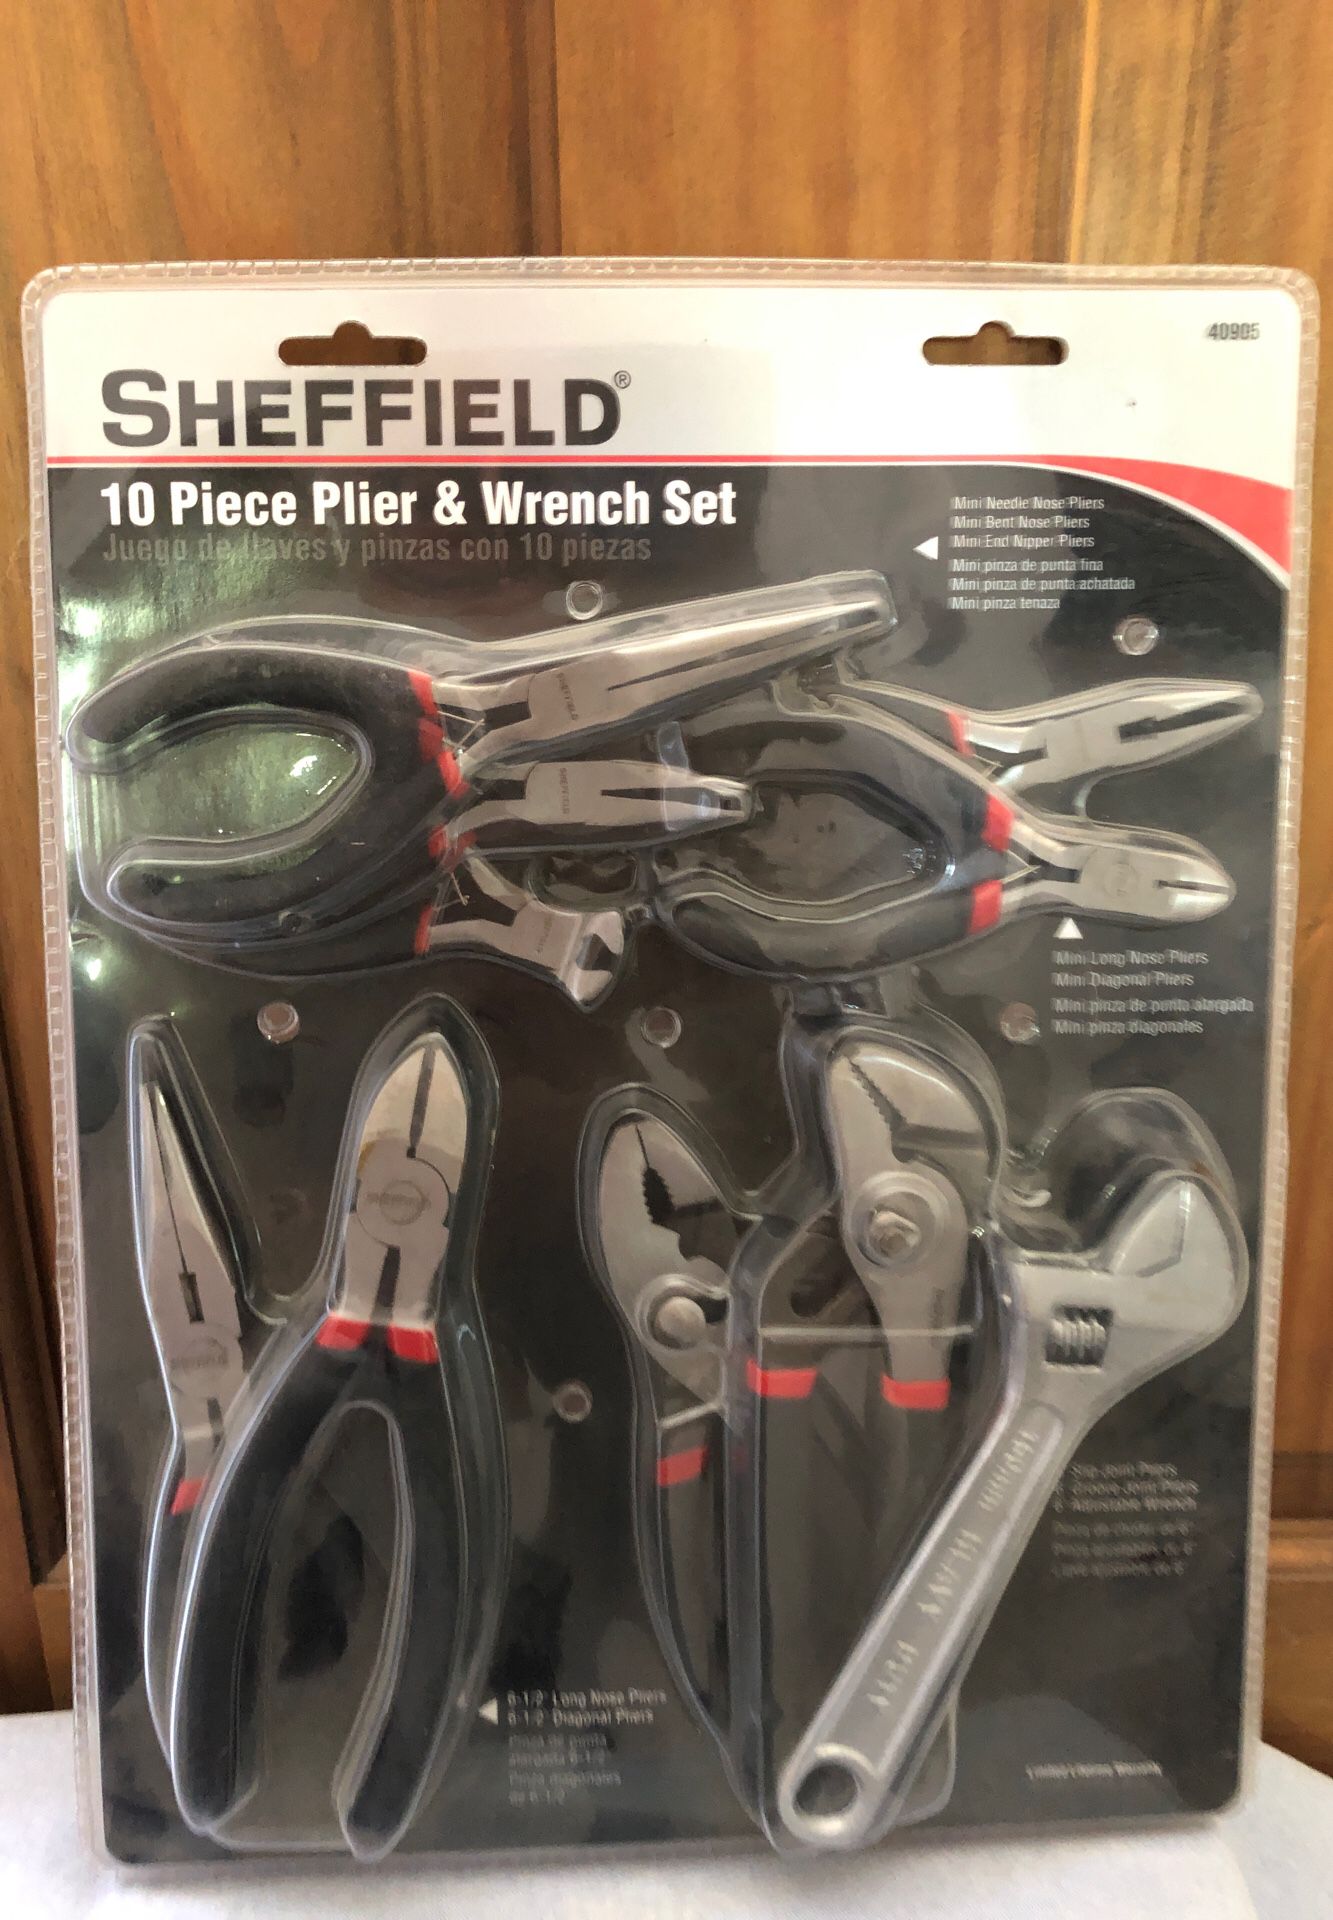 Sheffield 10 Piece Plier & Wrench Set